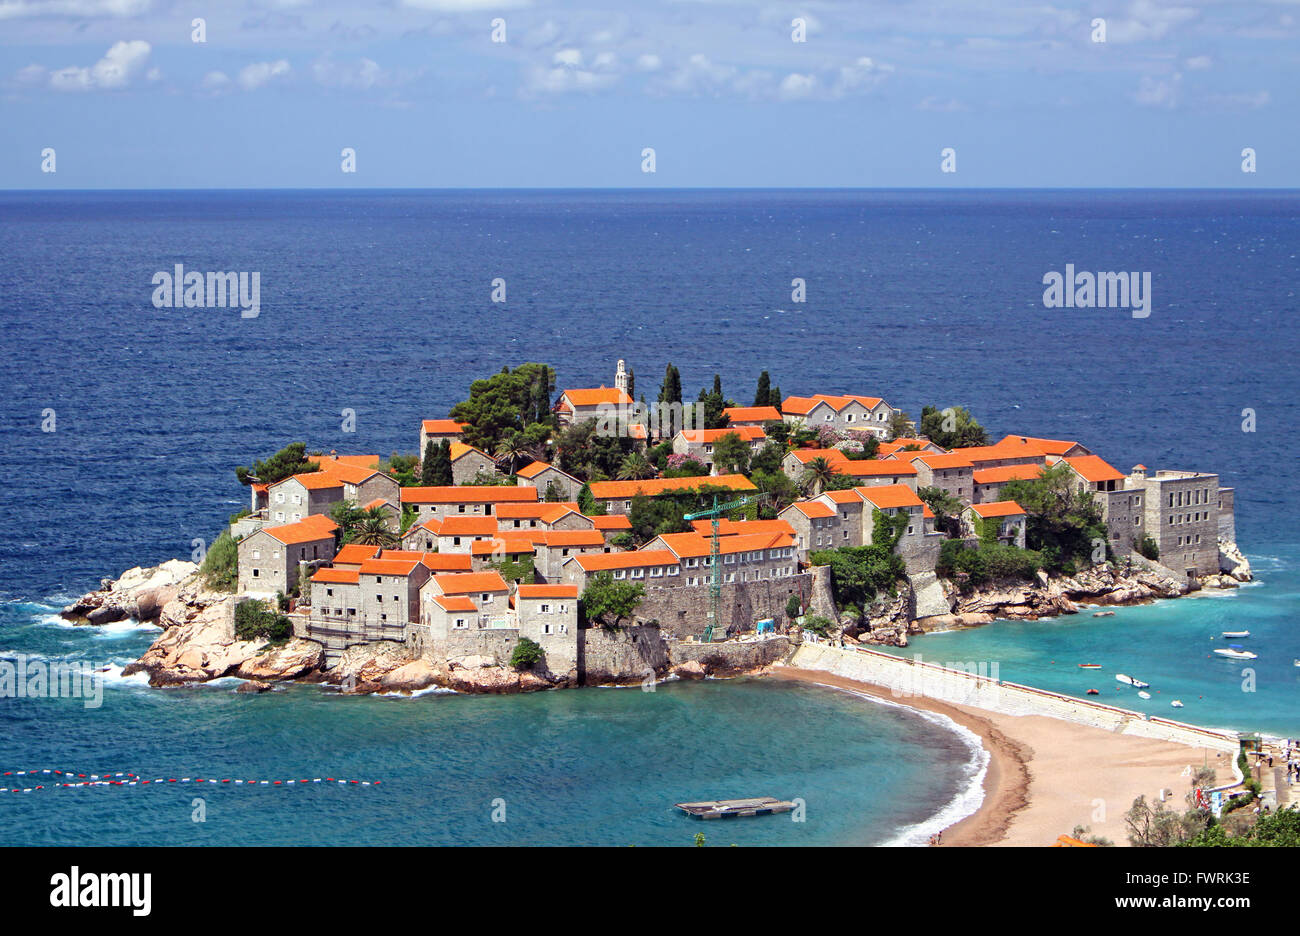 Sveti Stefan (St. Stephen) island in Adriatic sea, Montenegro Stock Photo